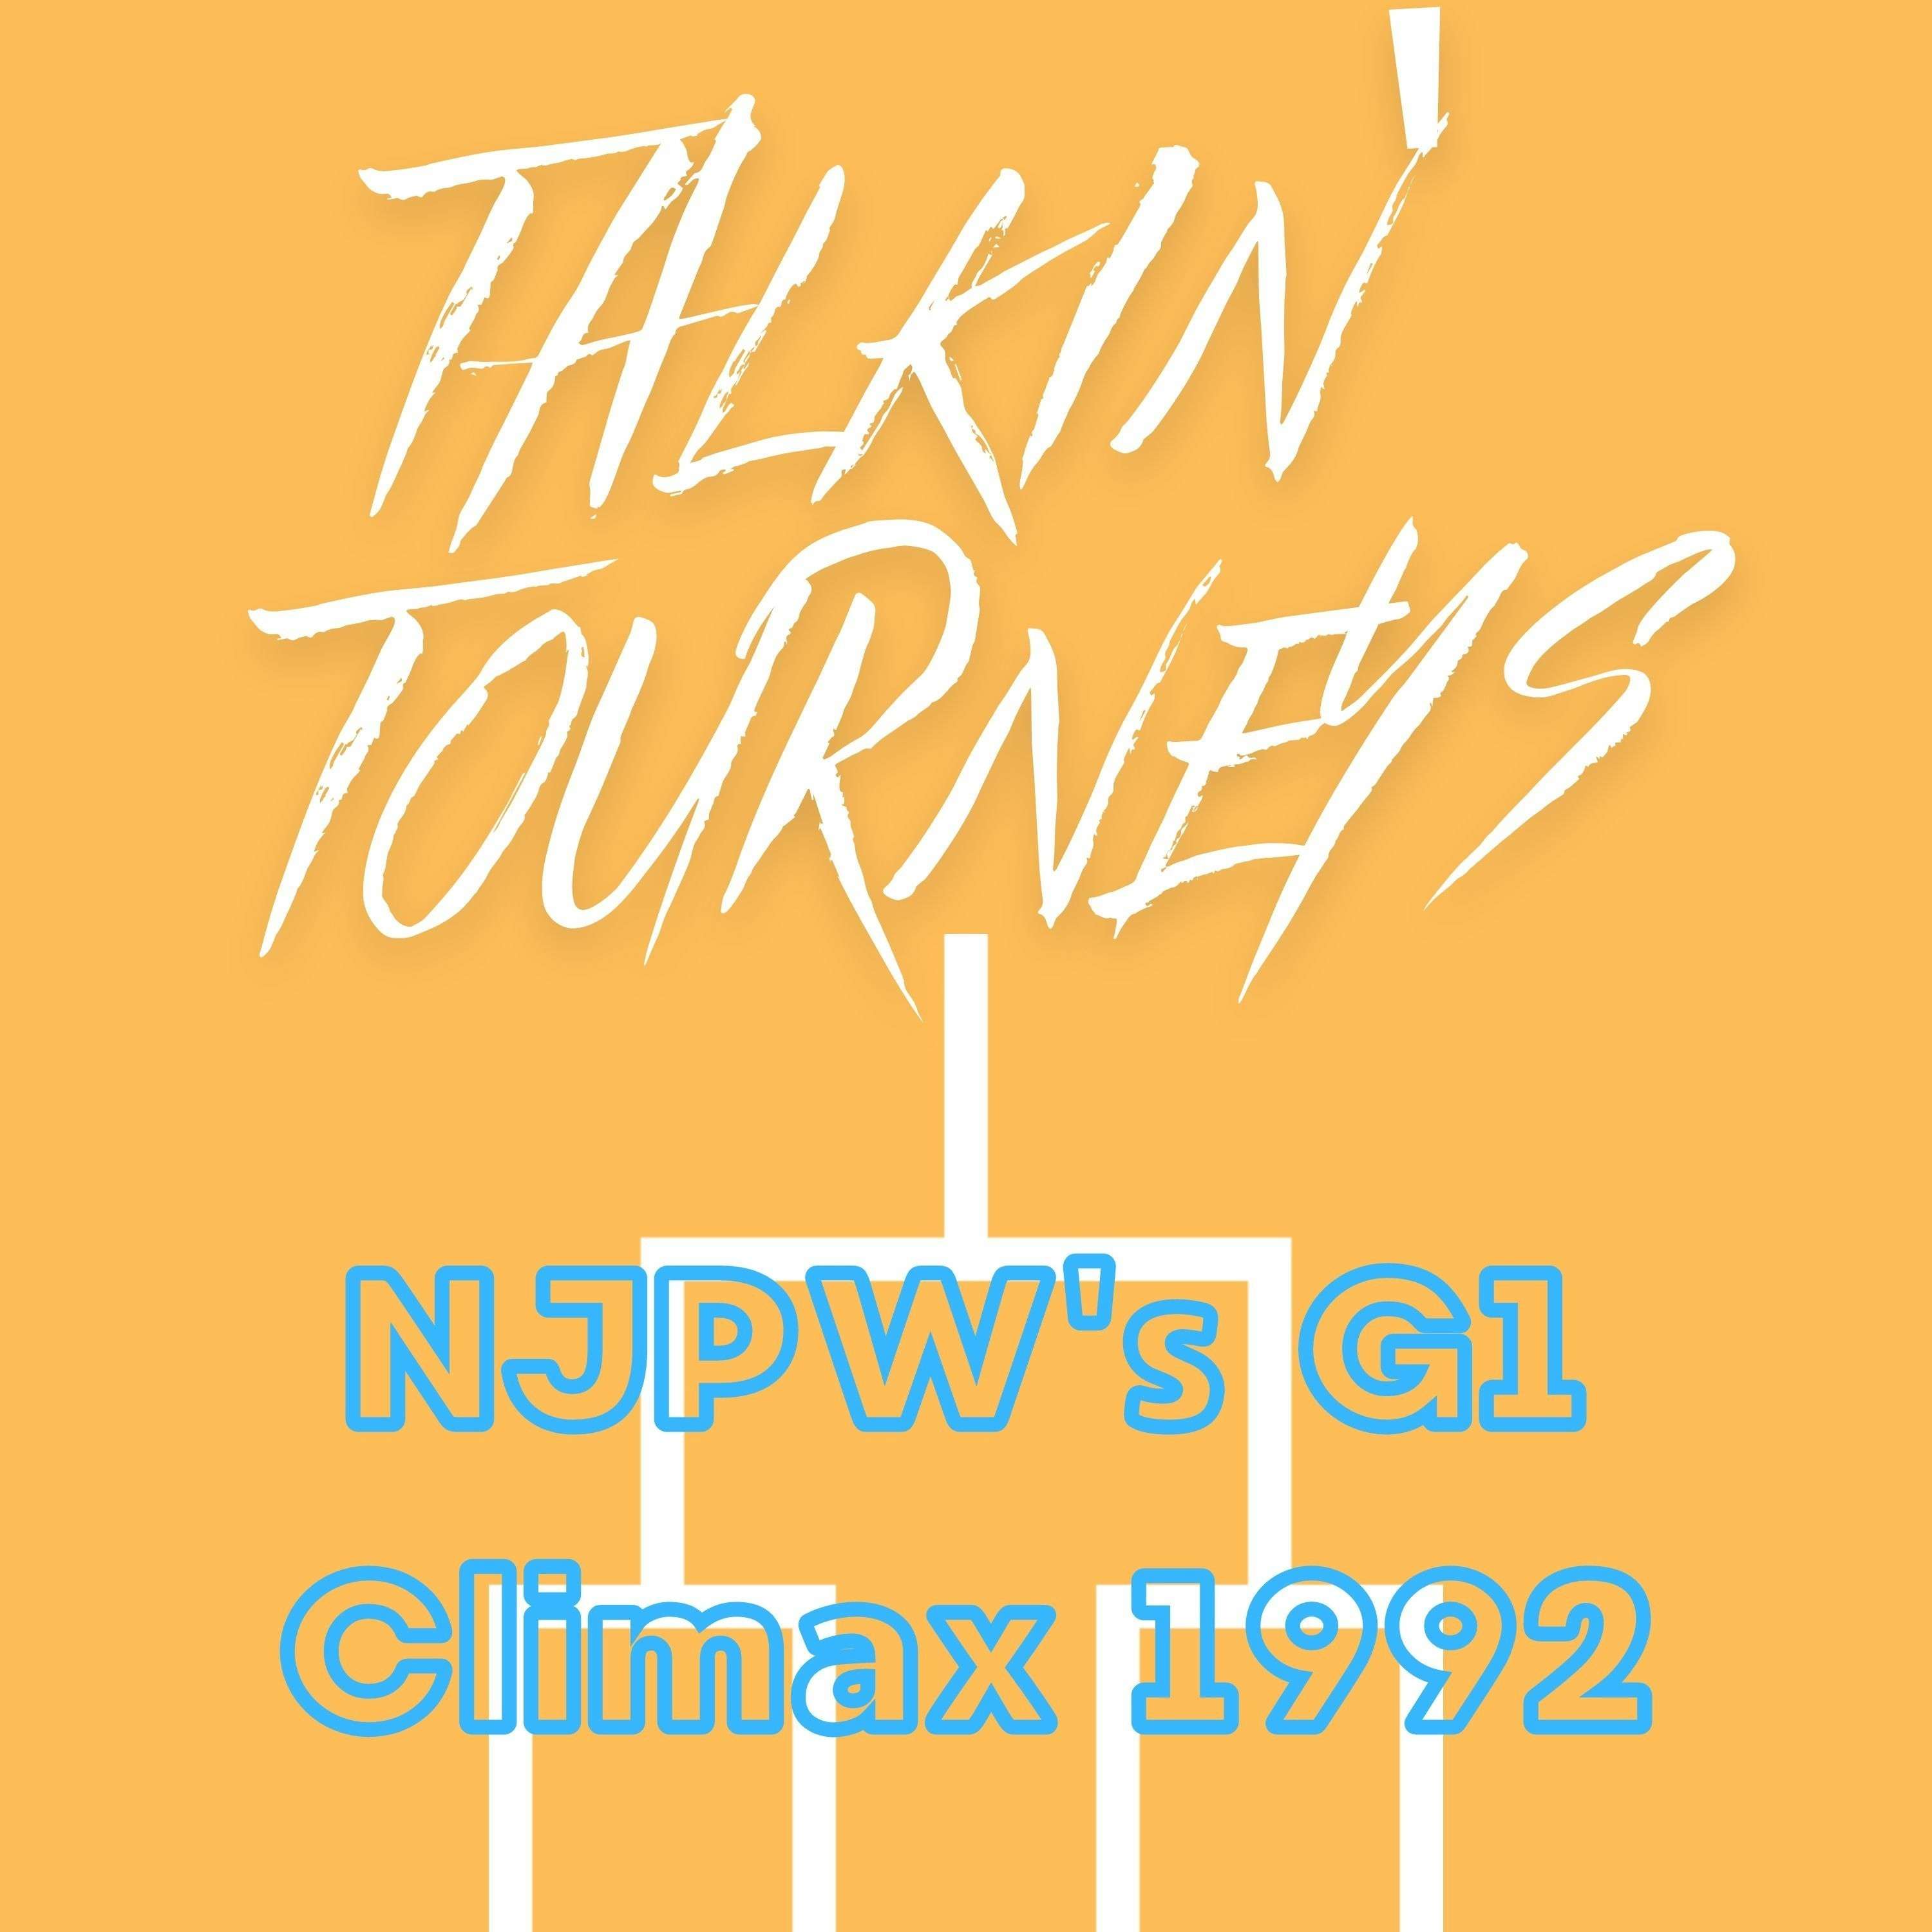 Talking Tourneys #14: NJPW’s G1 Climax 1992